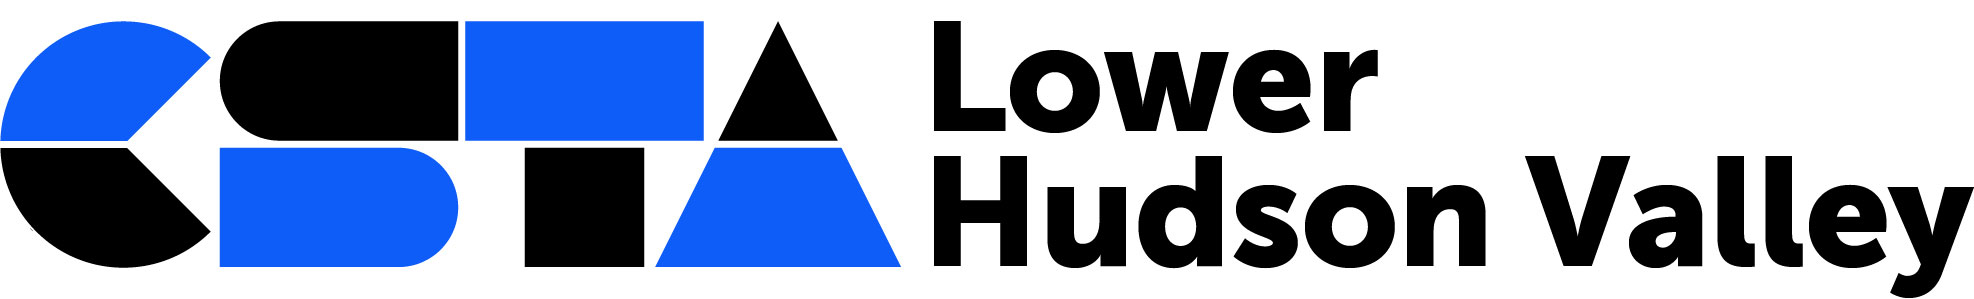 CSTA Lower Hudson Valley logo